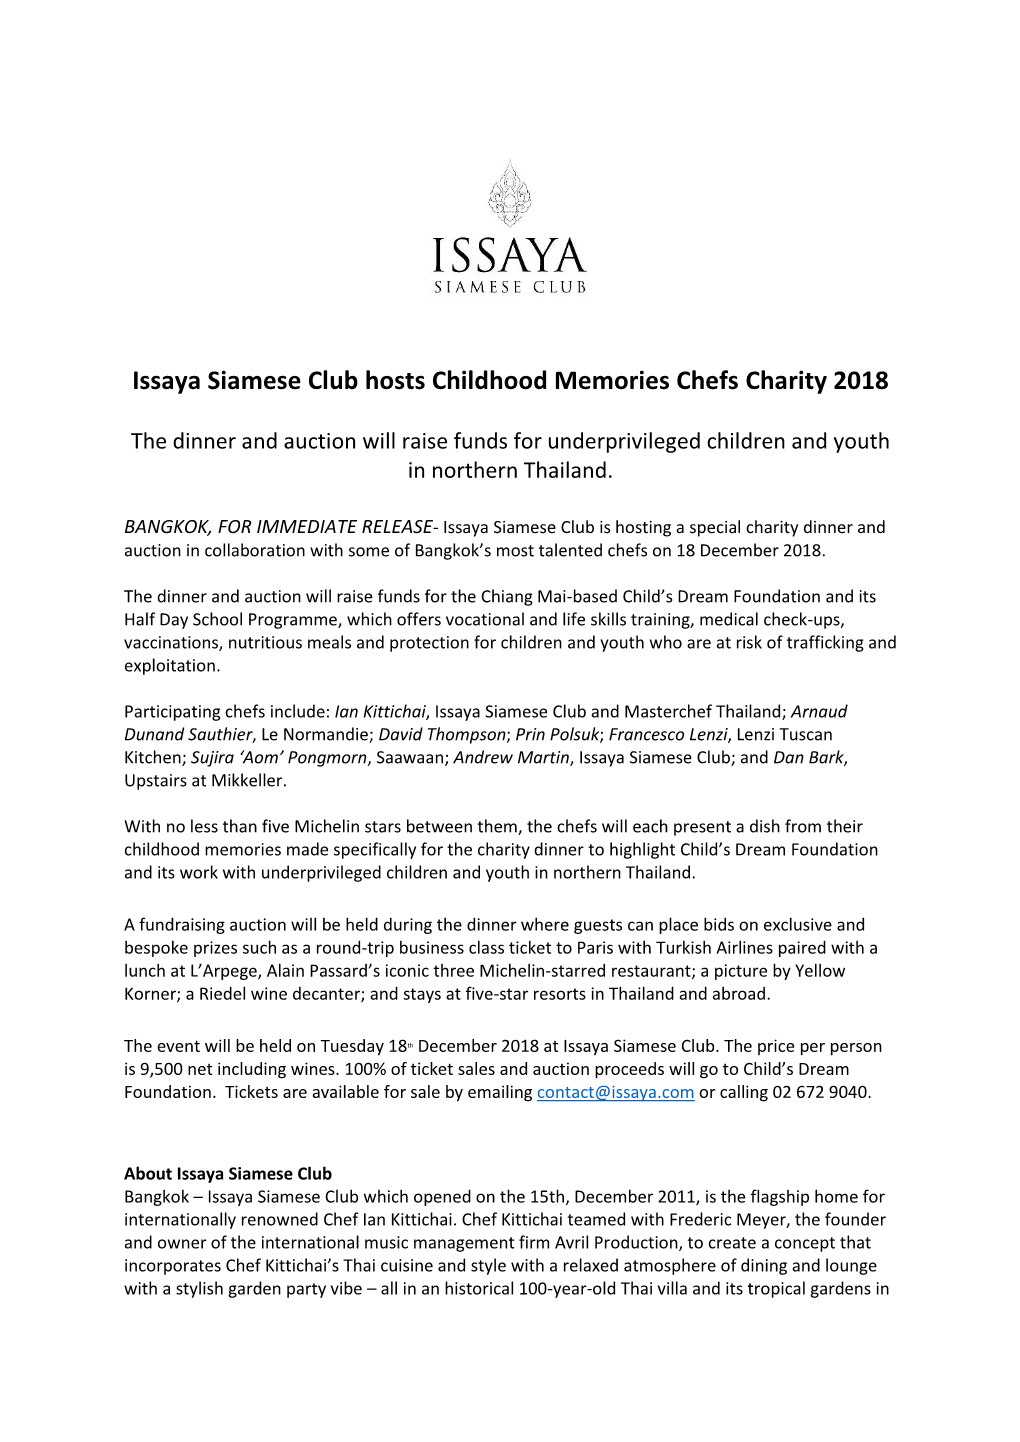 Issaya Siamese Club Hosts Childhood Memories Chefs Charity 2018